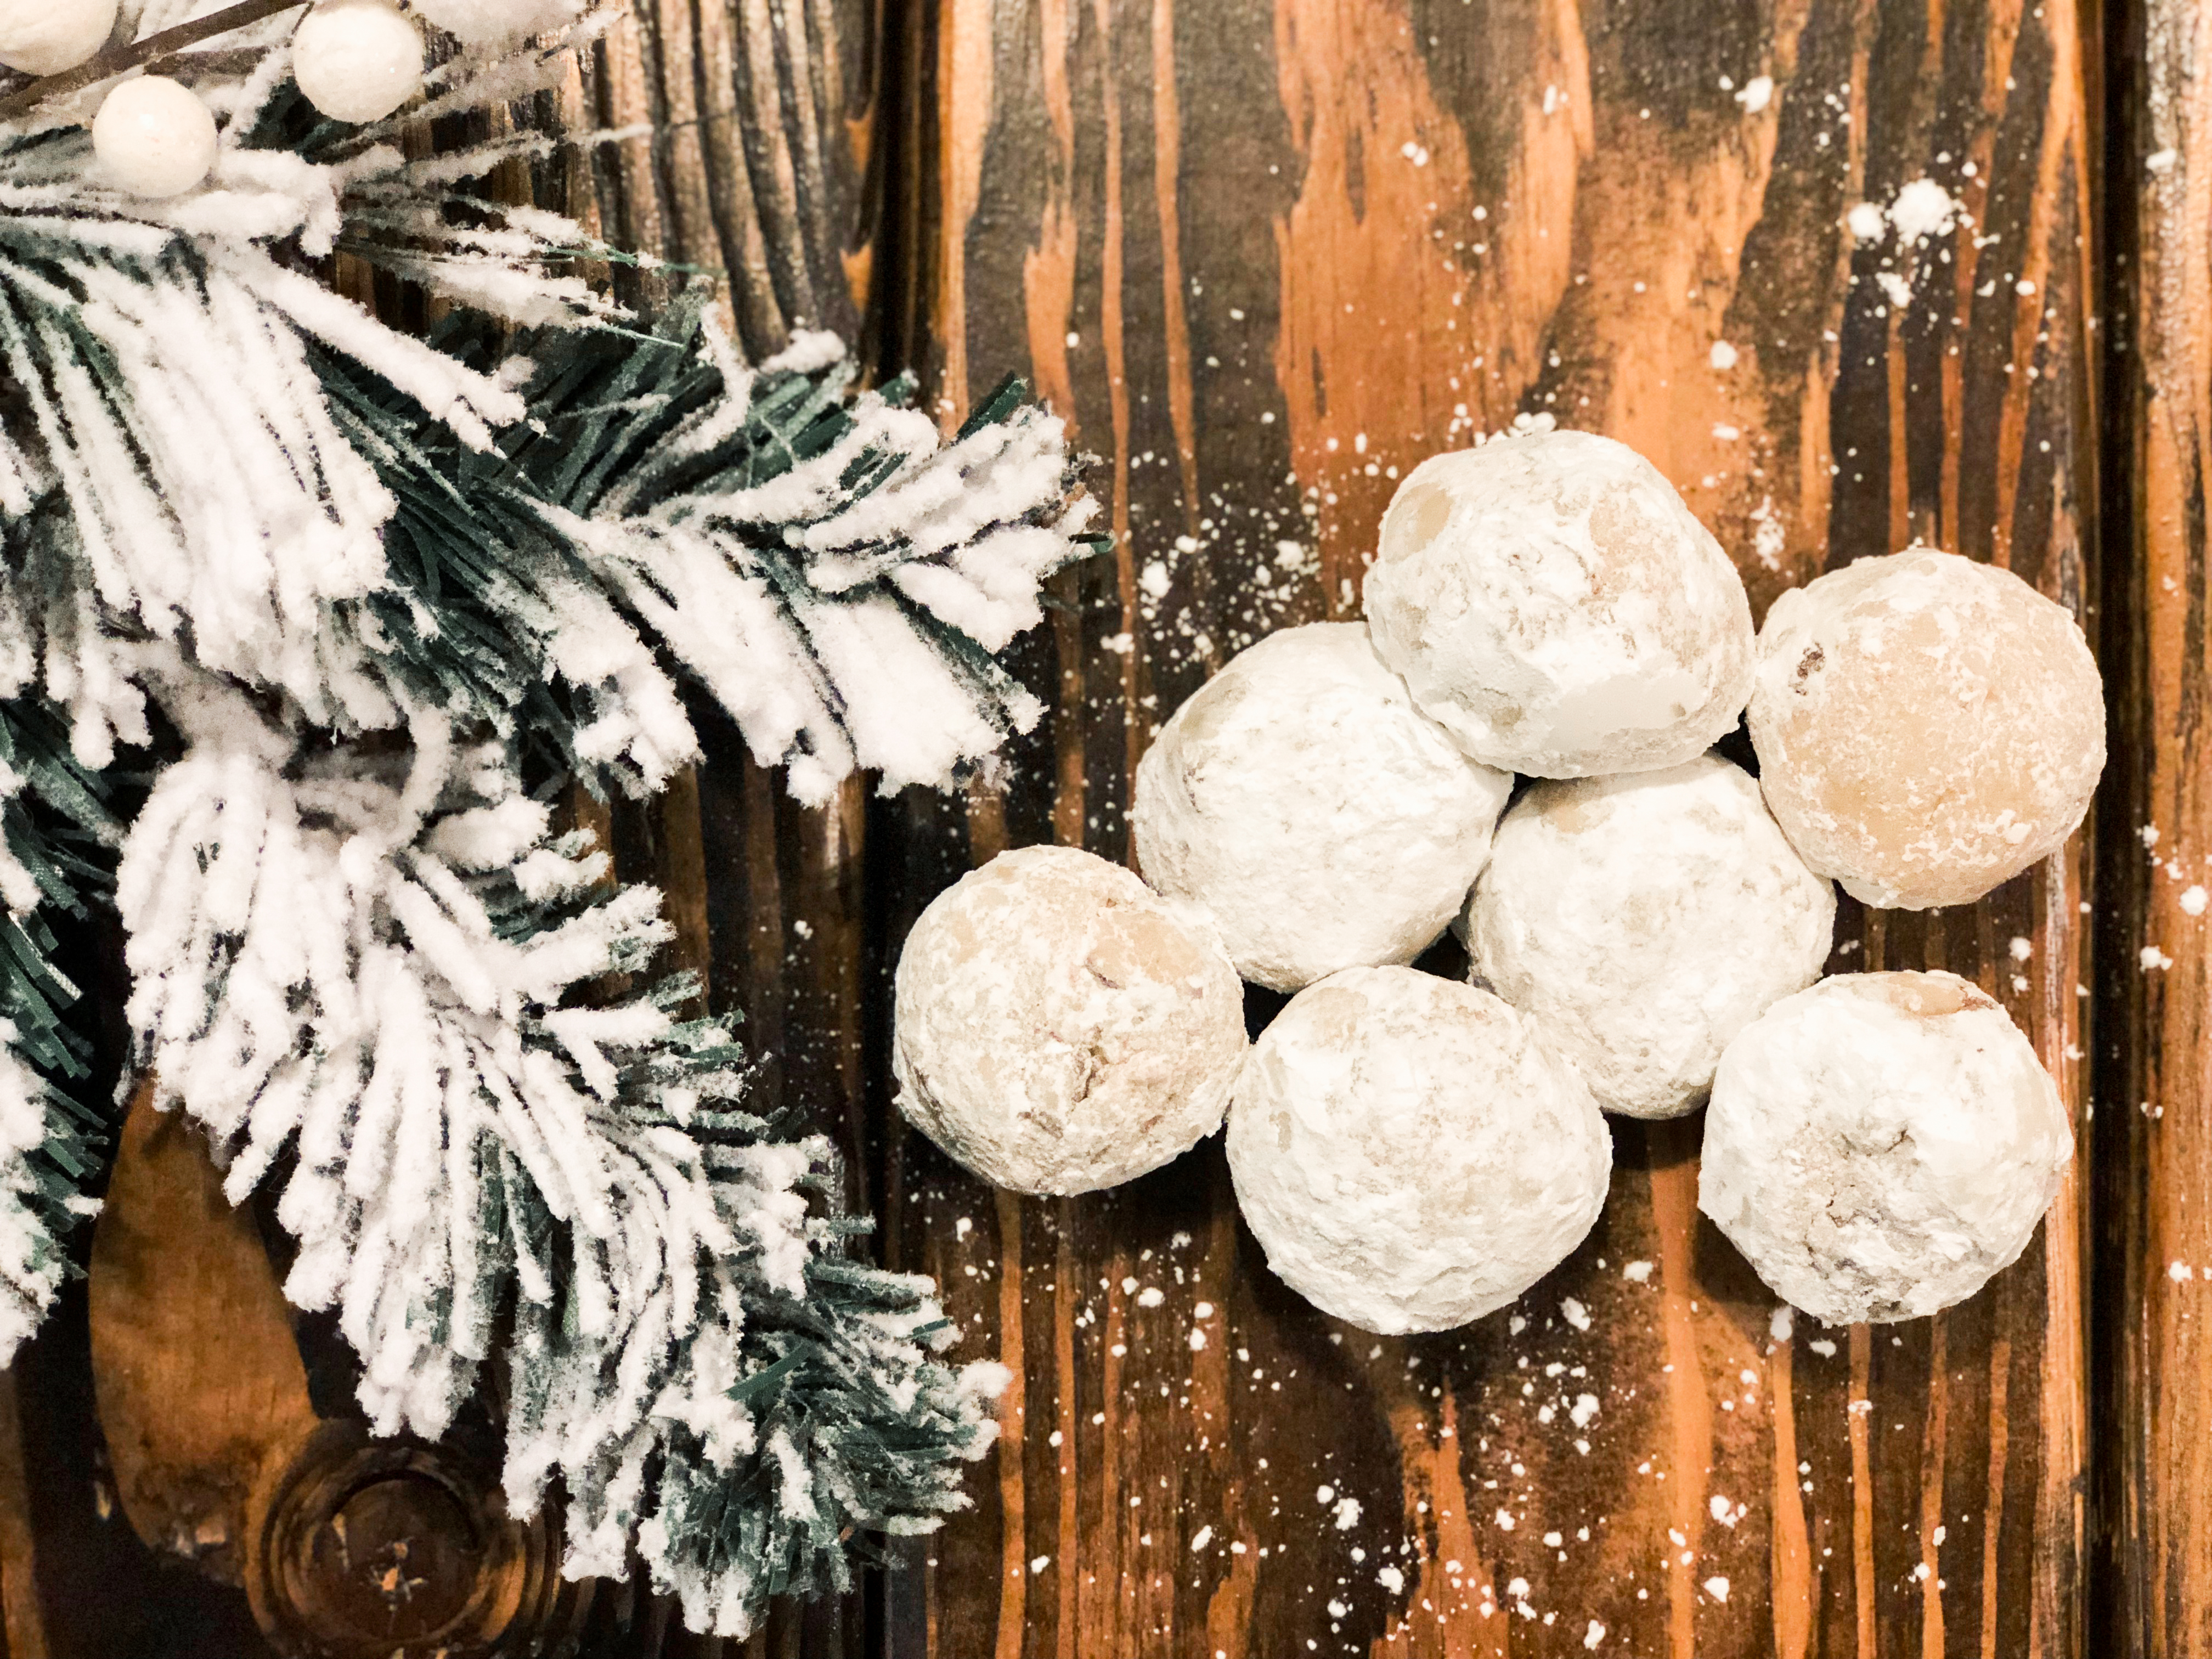 Christmas Cookies - The best pecan sandies snowballs